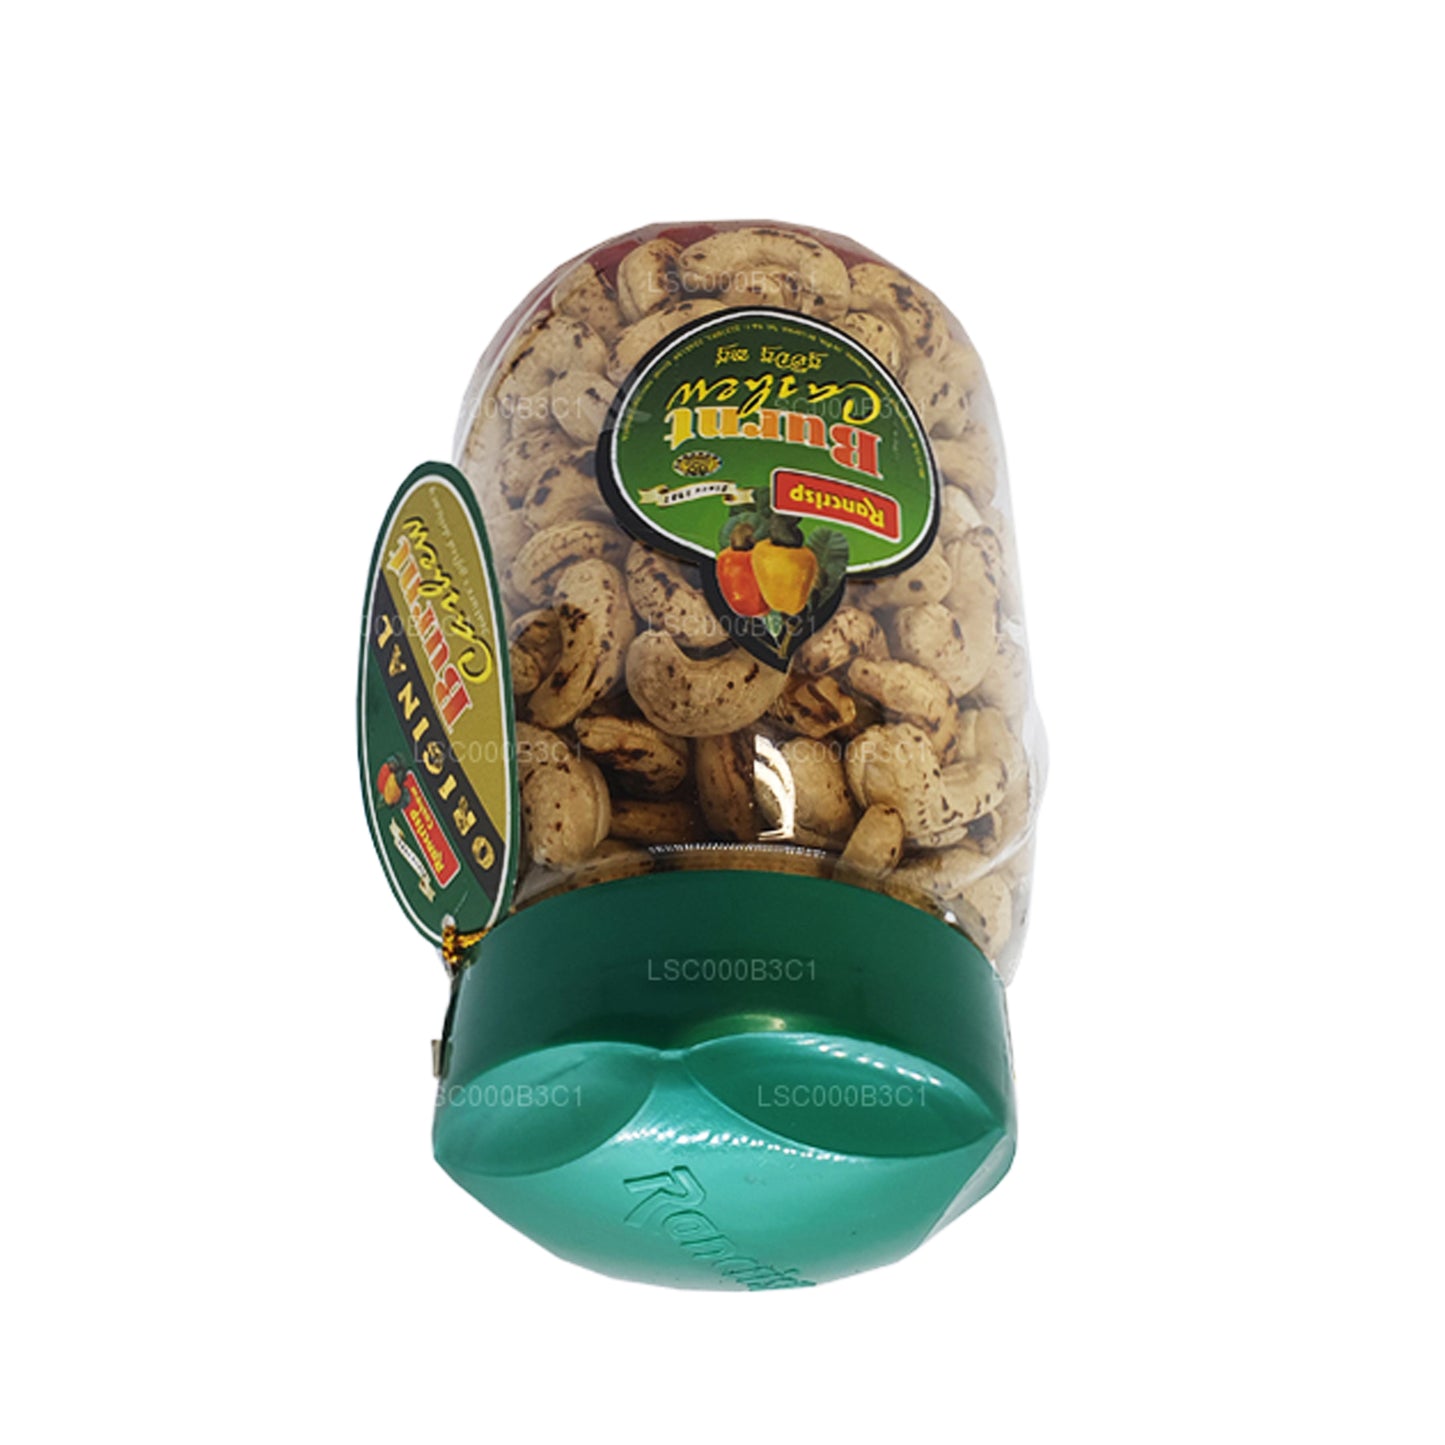 Rancrisp Burnt Cashew Nuts (450g)